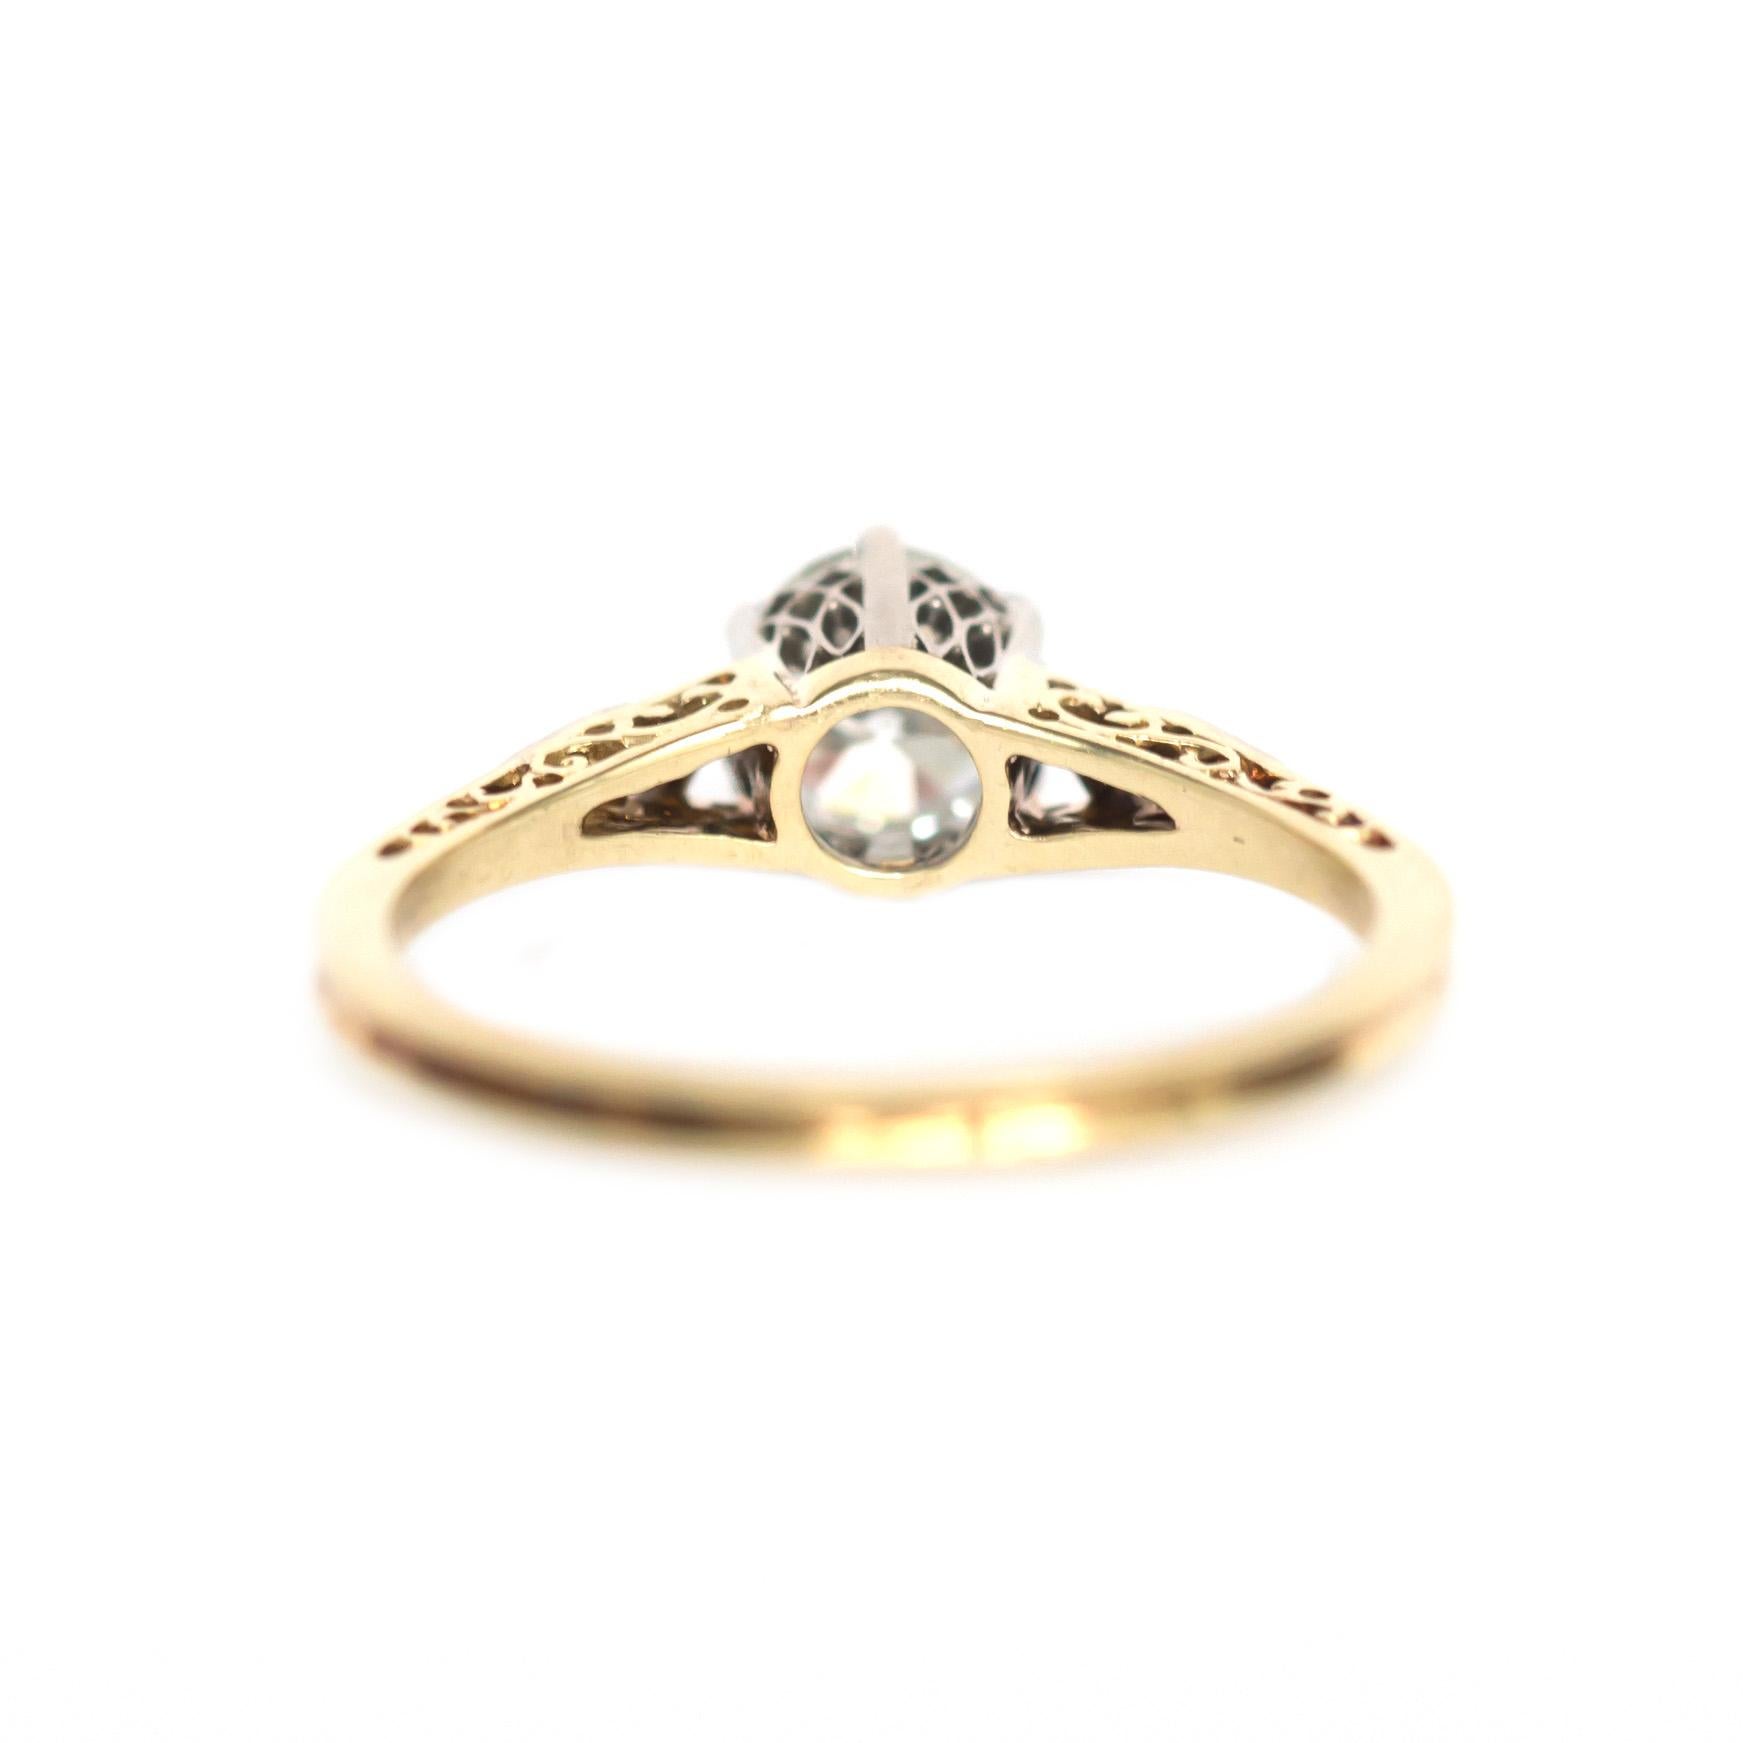 57 carat diamond ring